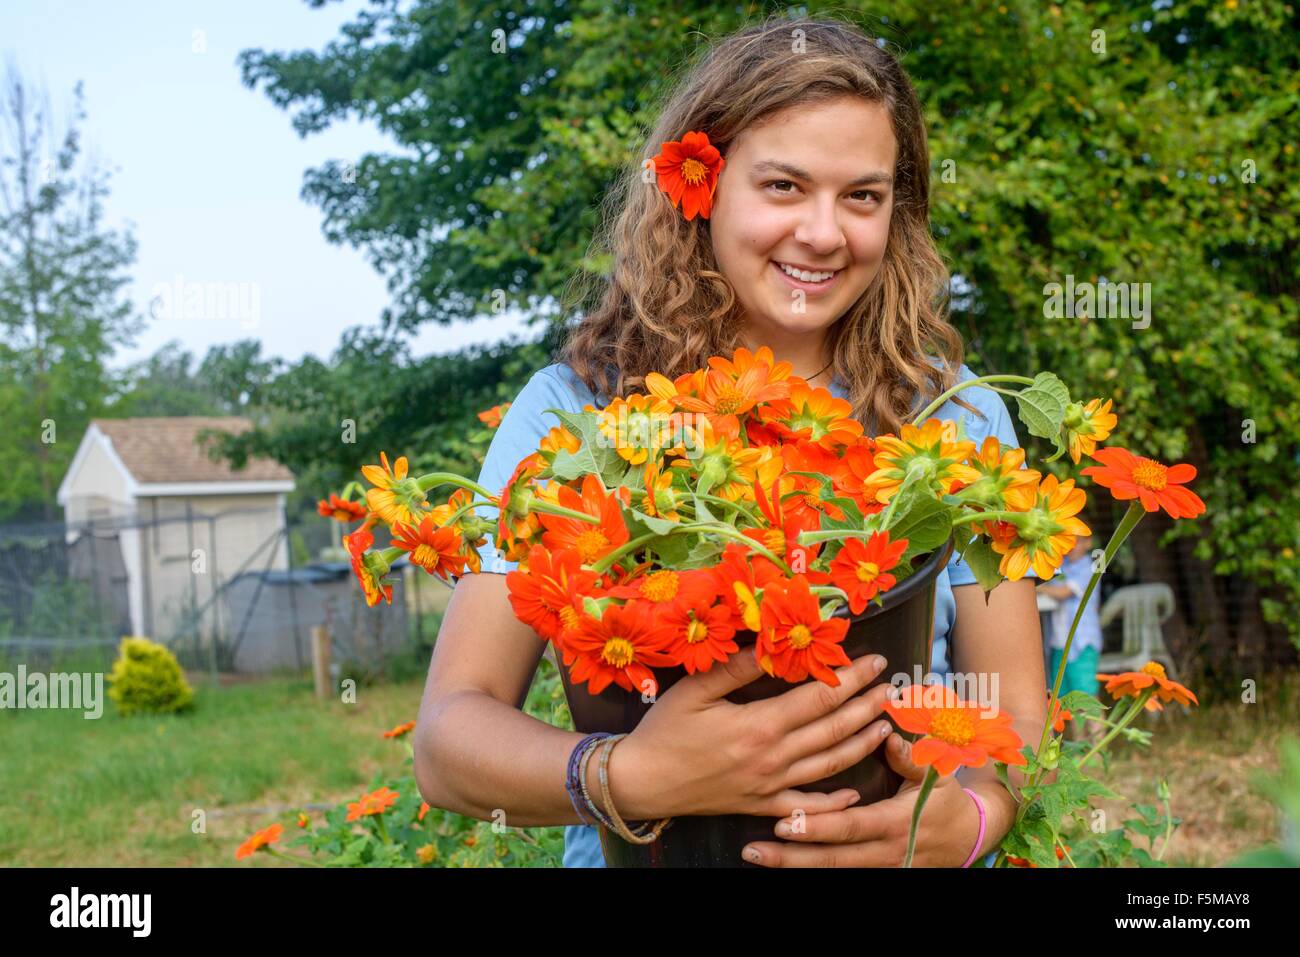 Portrait of female farm worker holding a bucket of fresh cut flowers Stock Photo